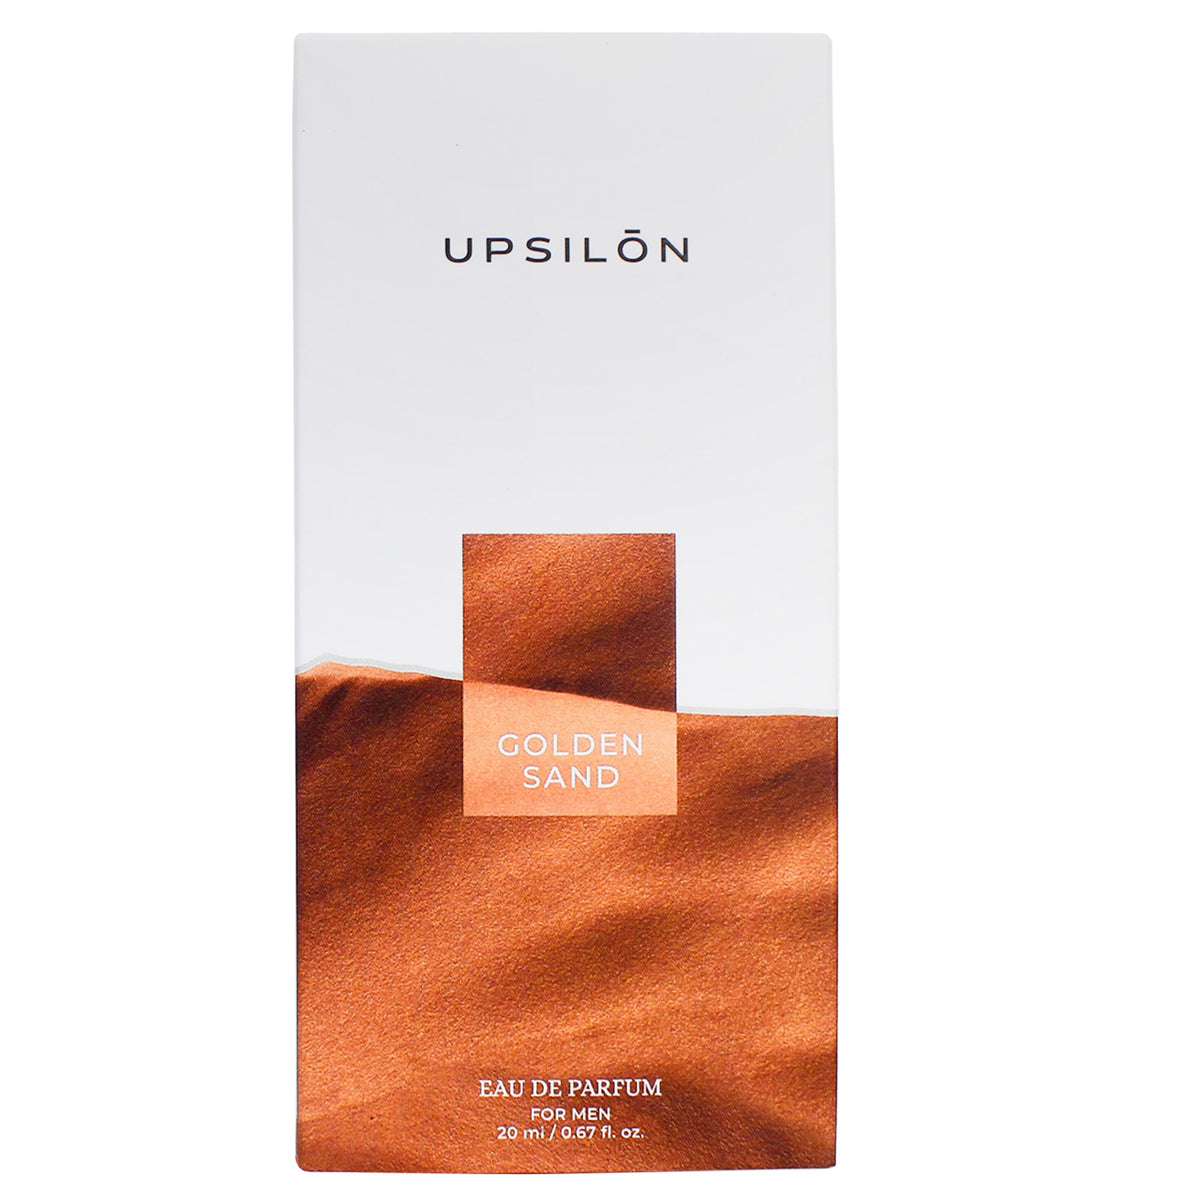 Upsilon Golden Sand Eau de Parfum for Men | 20ml/0.67 fl. oz. | Premium long-lasting fresh fragrance | Luxury men's perfume spray